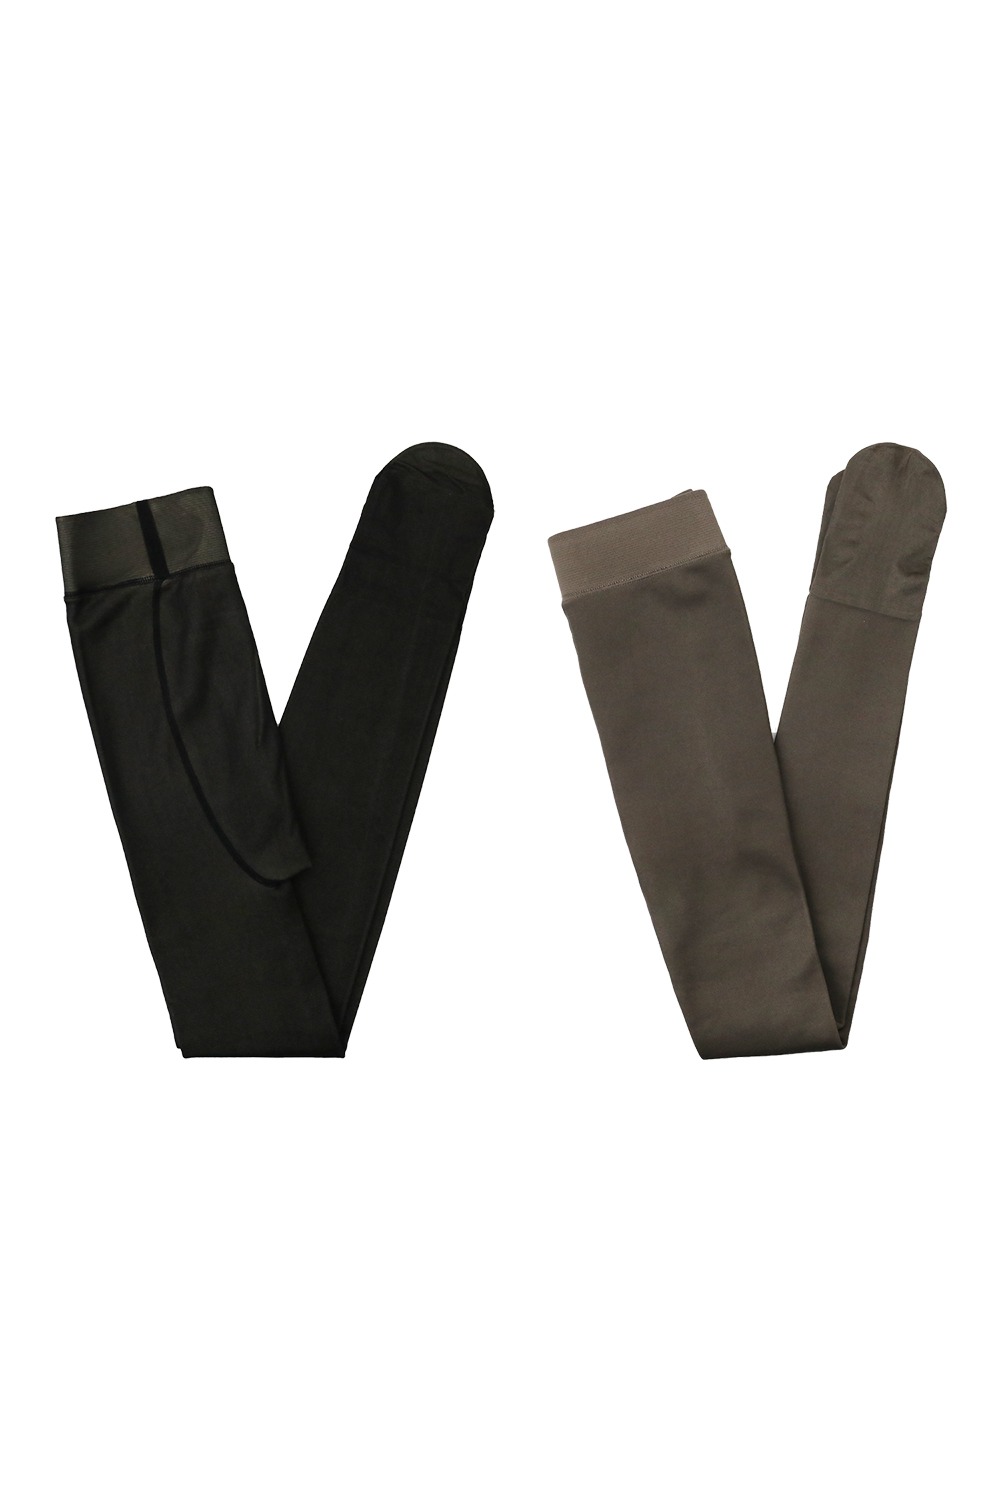 [Matching]Illusion Fleece-lined Stockings Best Item